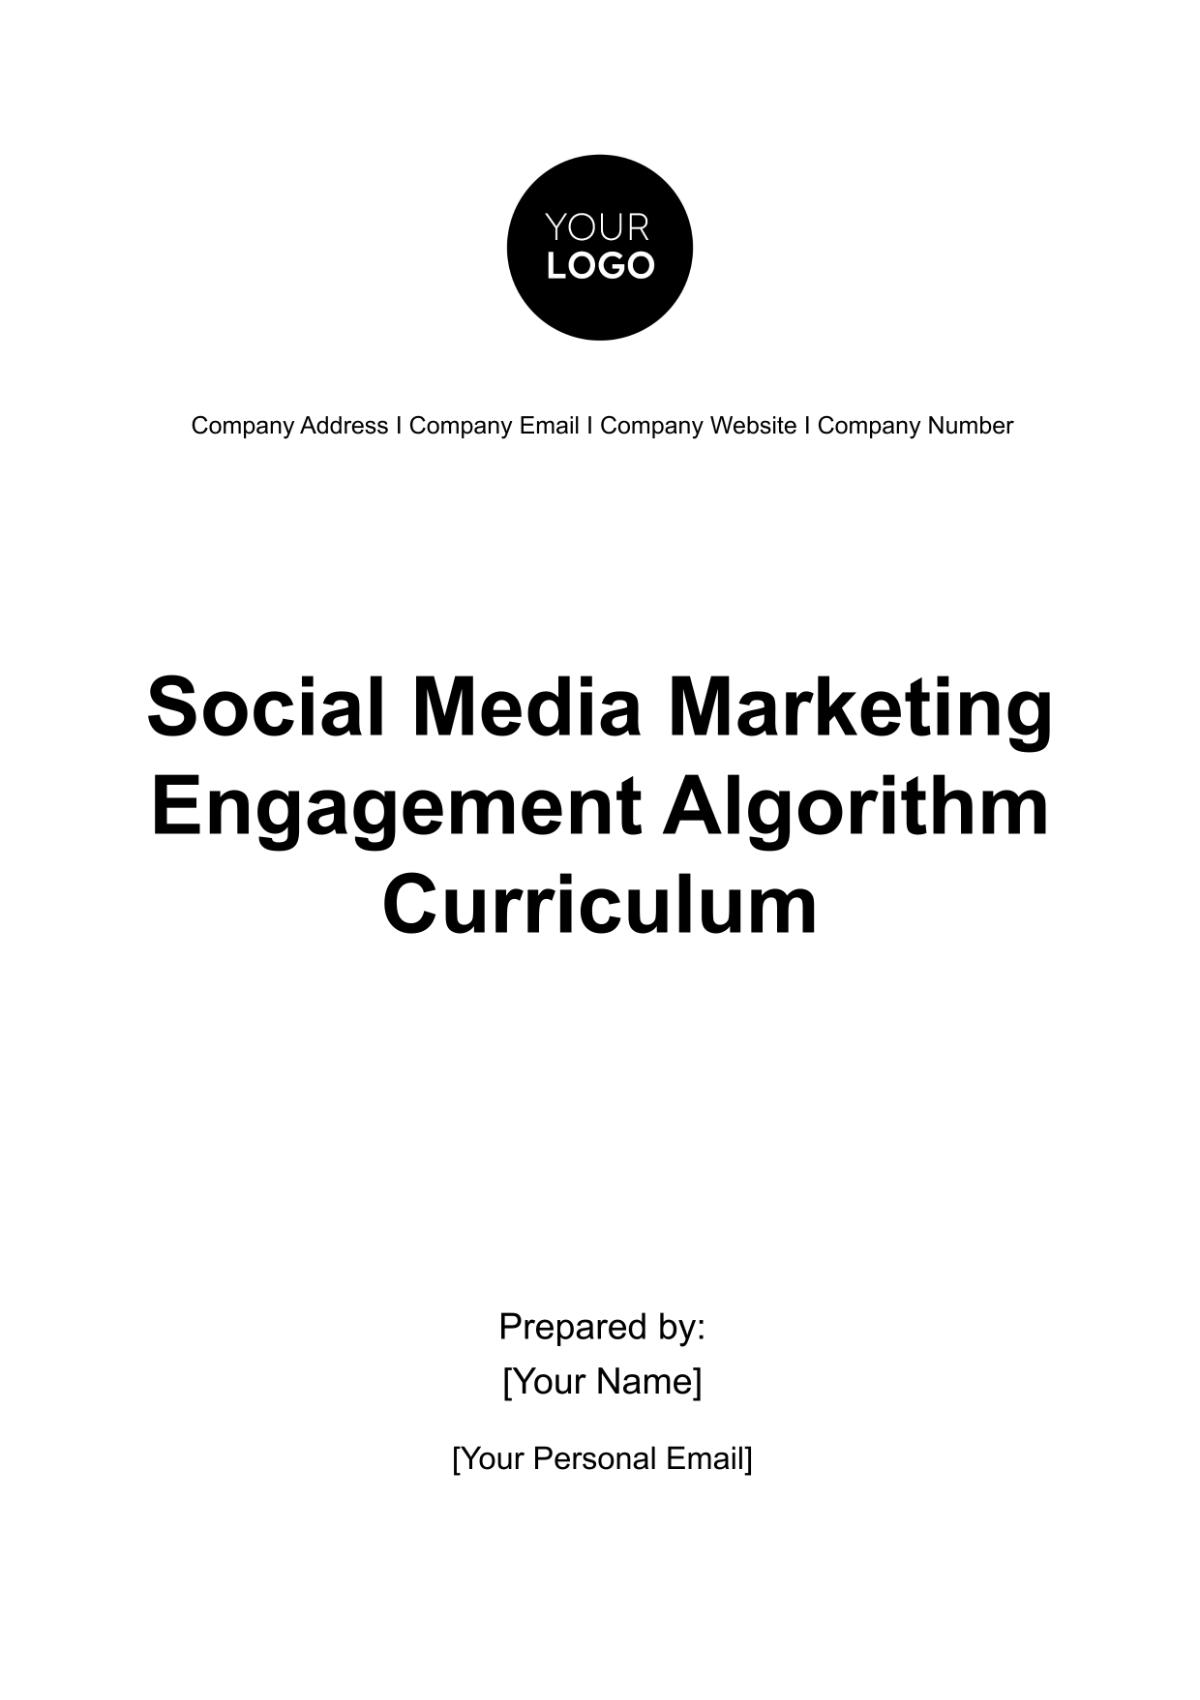 Social Media Marketing Engagement Algorithm Curriculum Template